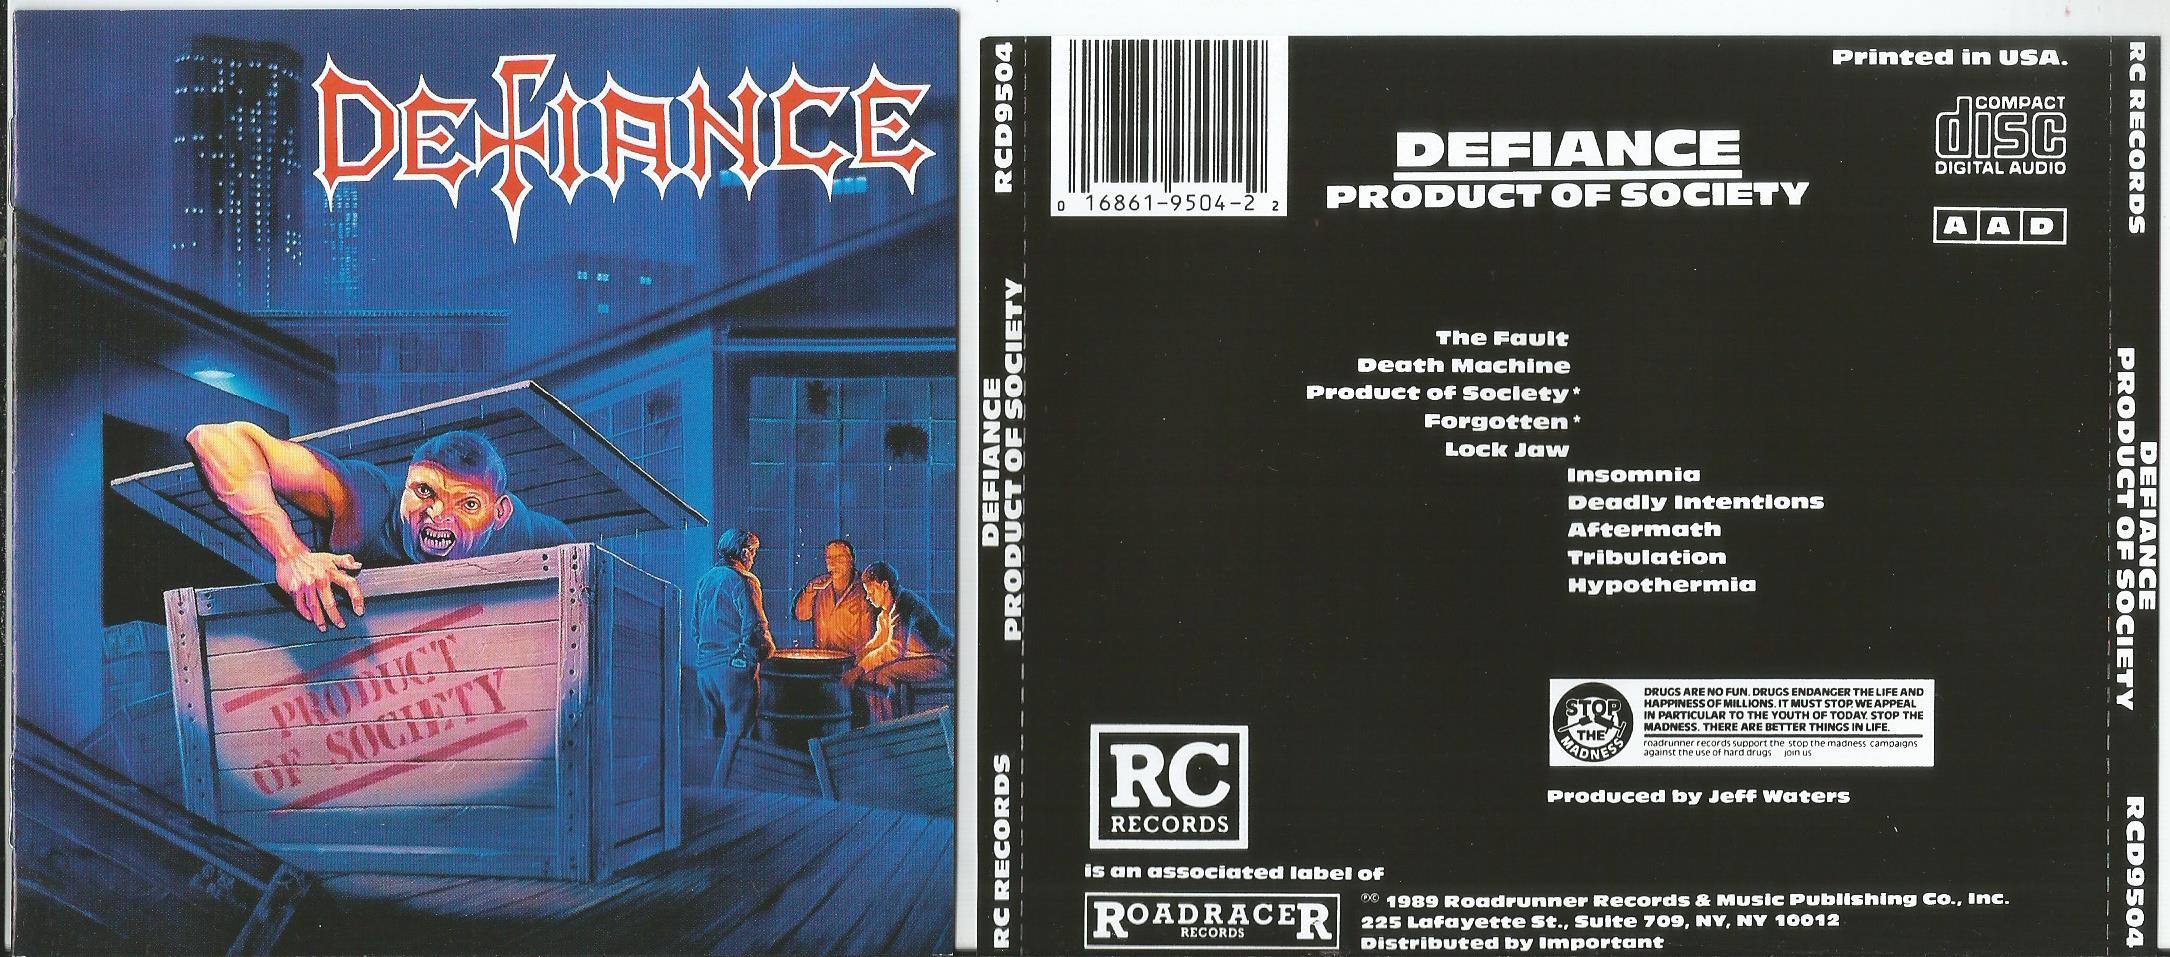 Society 8. Defiance product of Society. Detritus "Perpetual Defiance" (1990). Defiance Band. Defiance Band 1990.